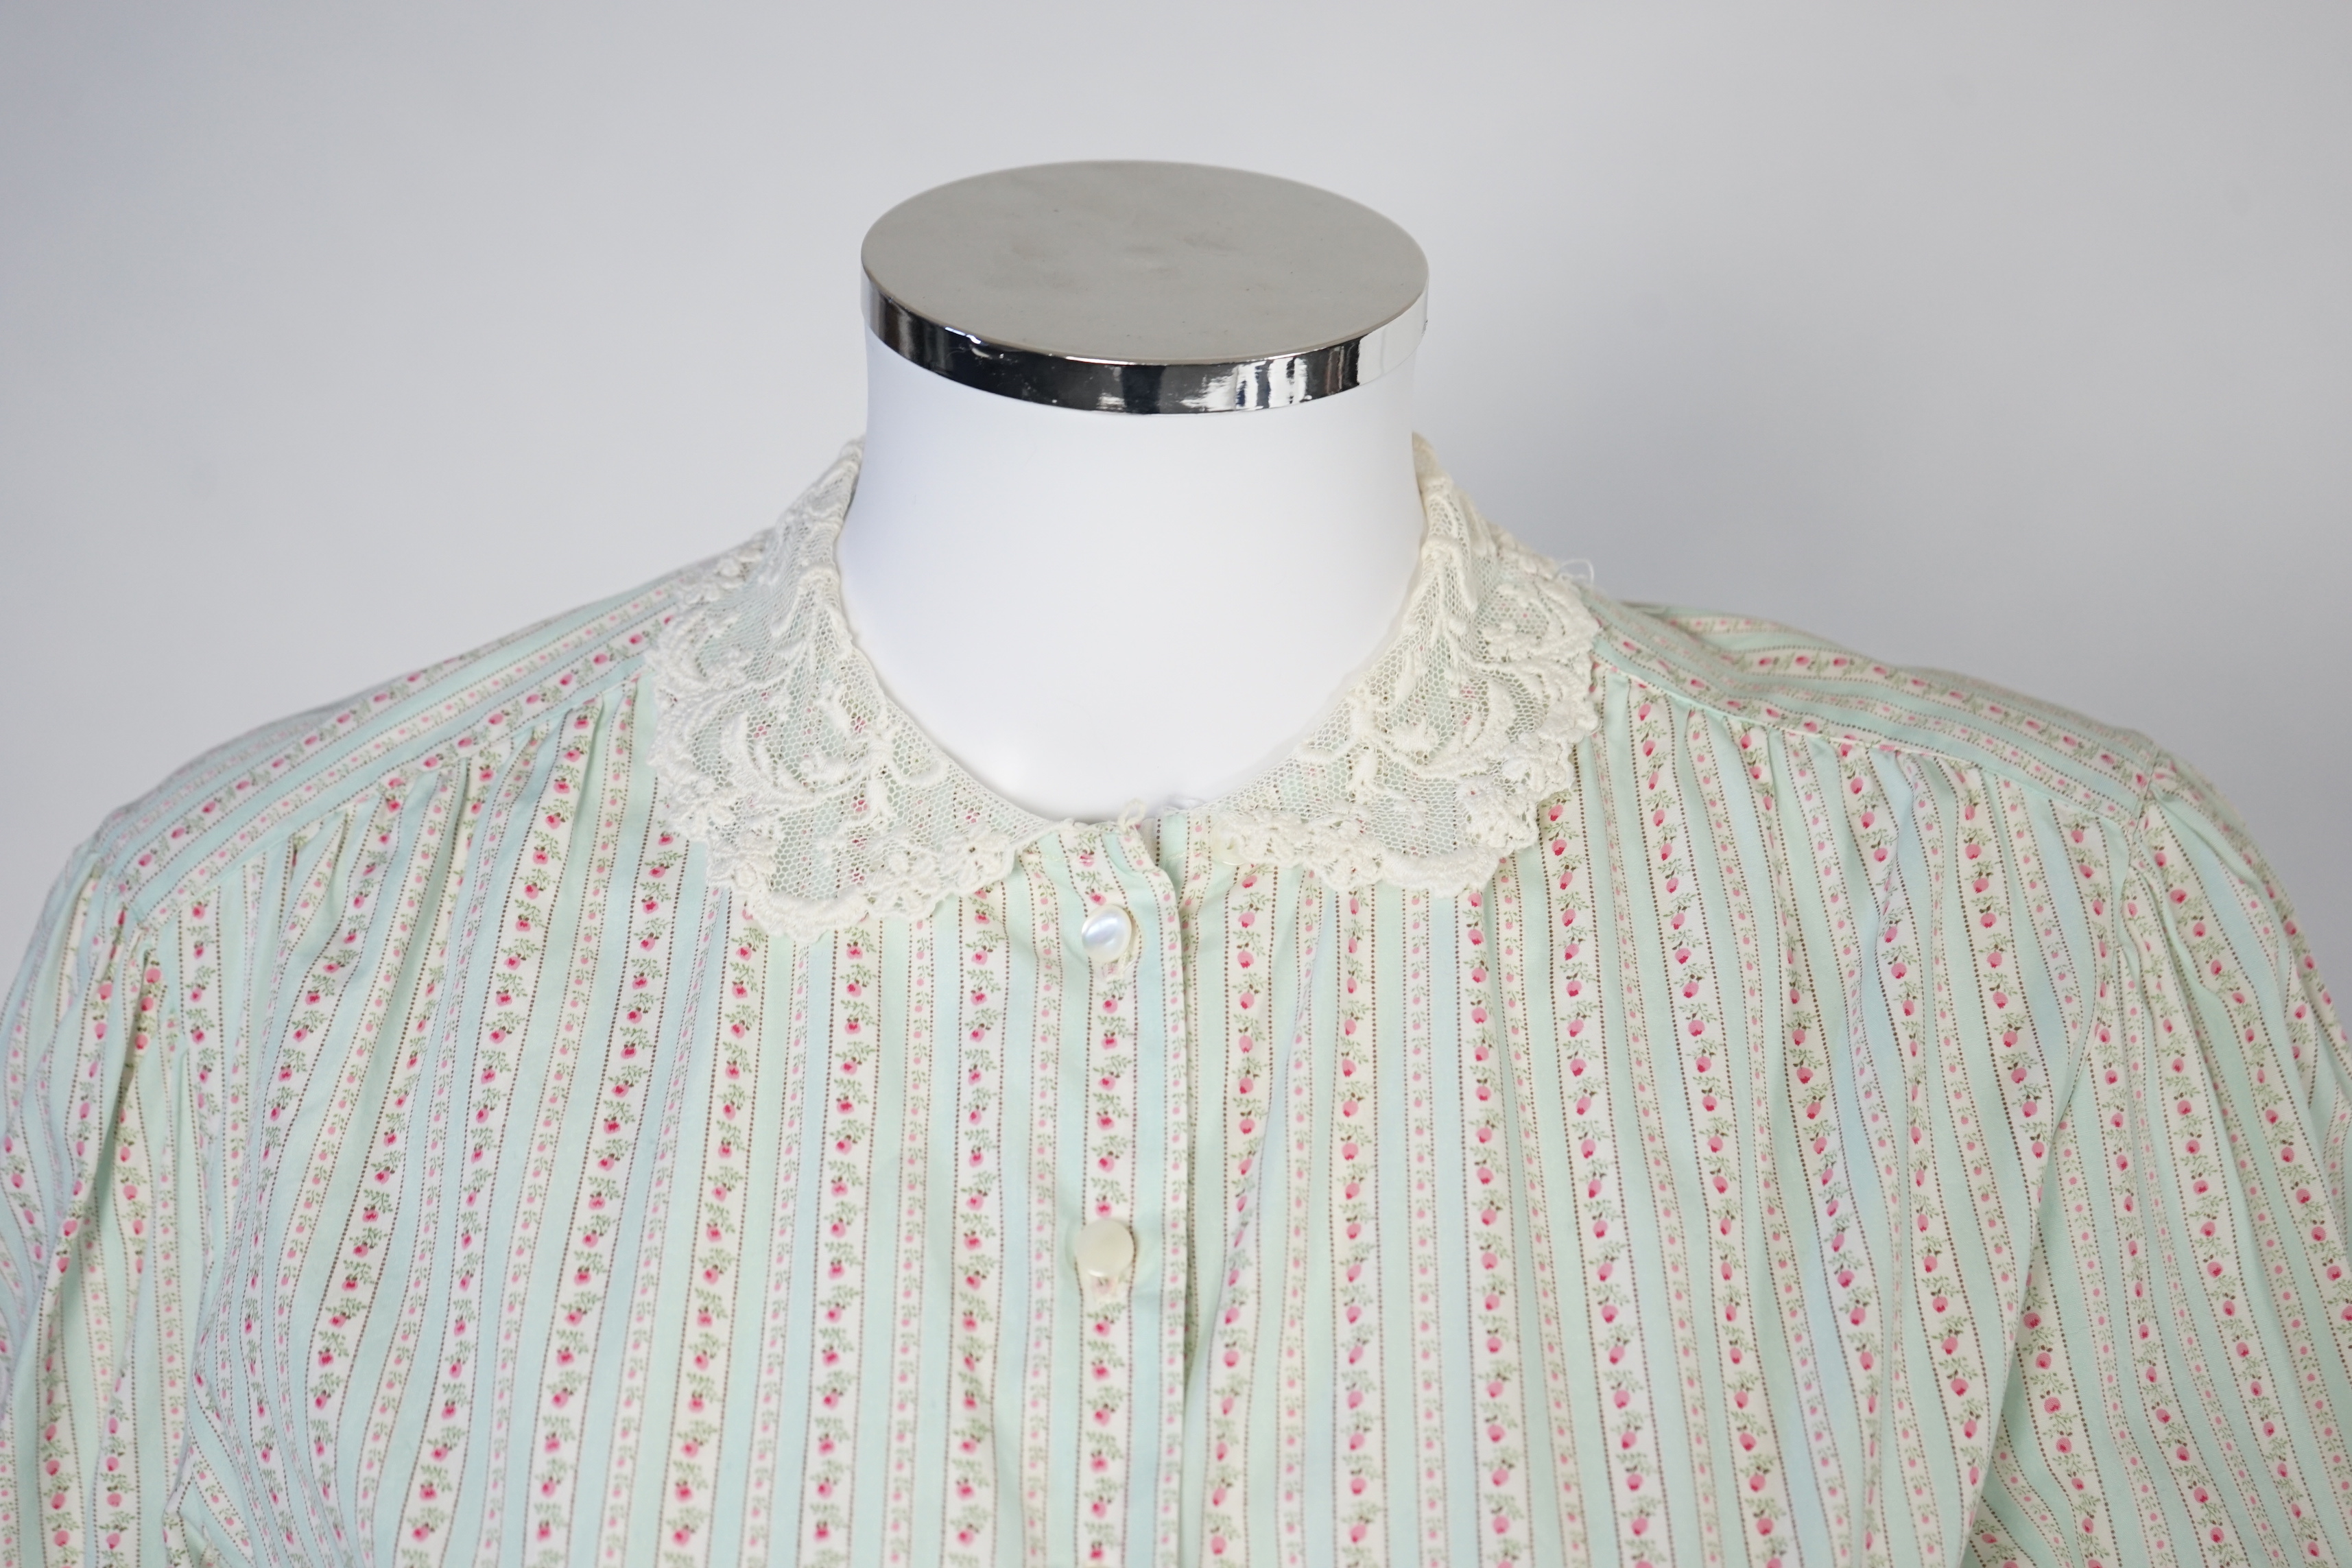 Two Ralph Lauren cotton blouses with lace detail, cream size 10, floral stripe size 8